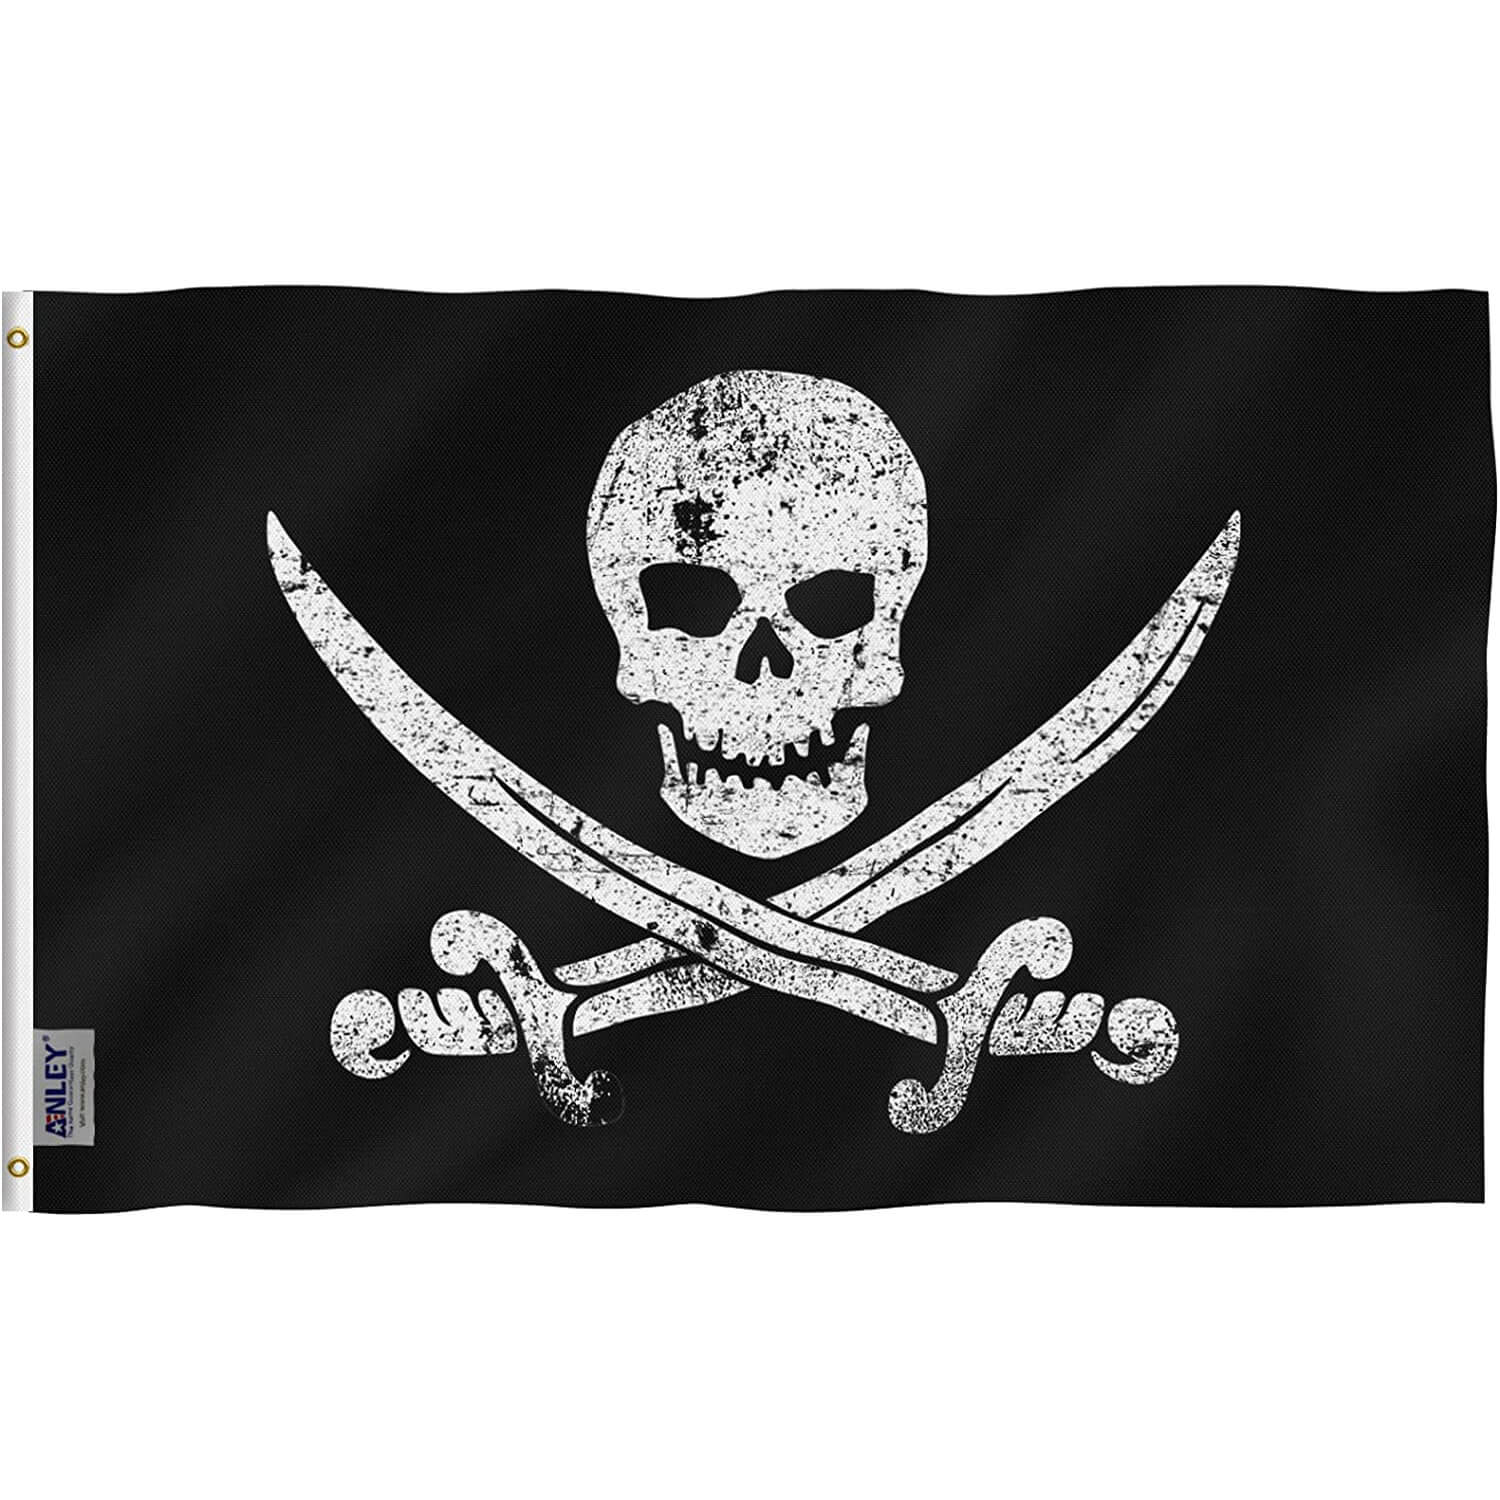 Anley Fly Breeze 3x5 Foot Jack Rackham Pirate Flag - Jolly Roger Flags